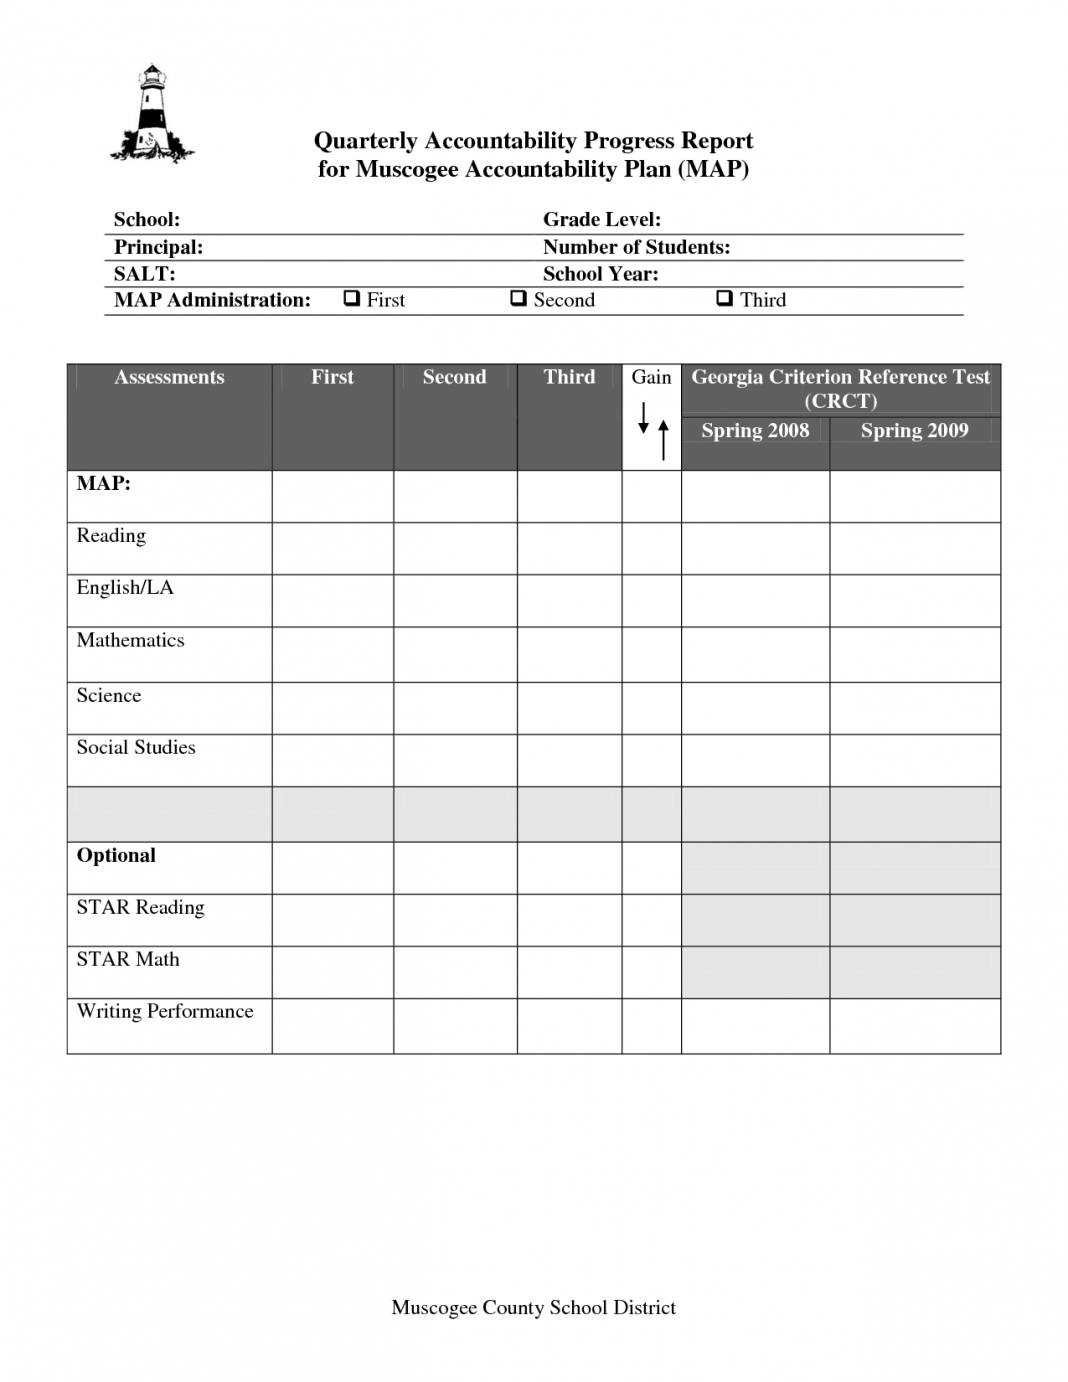 School Progress Report Template Card Thumb Free Online Maker Intended For High School Progress Report Template